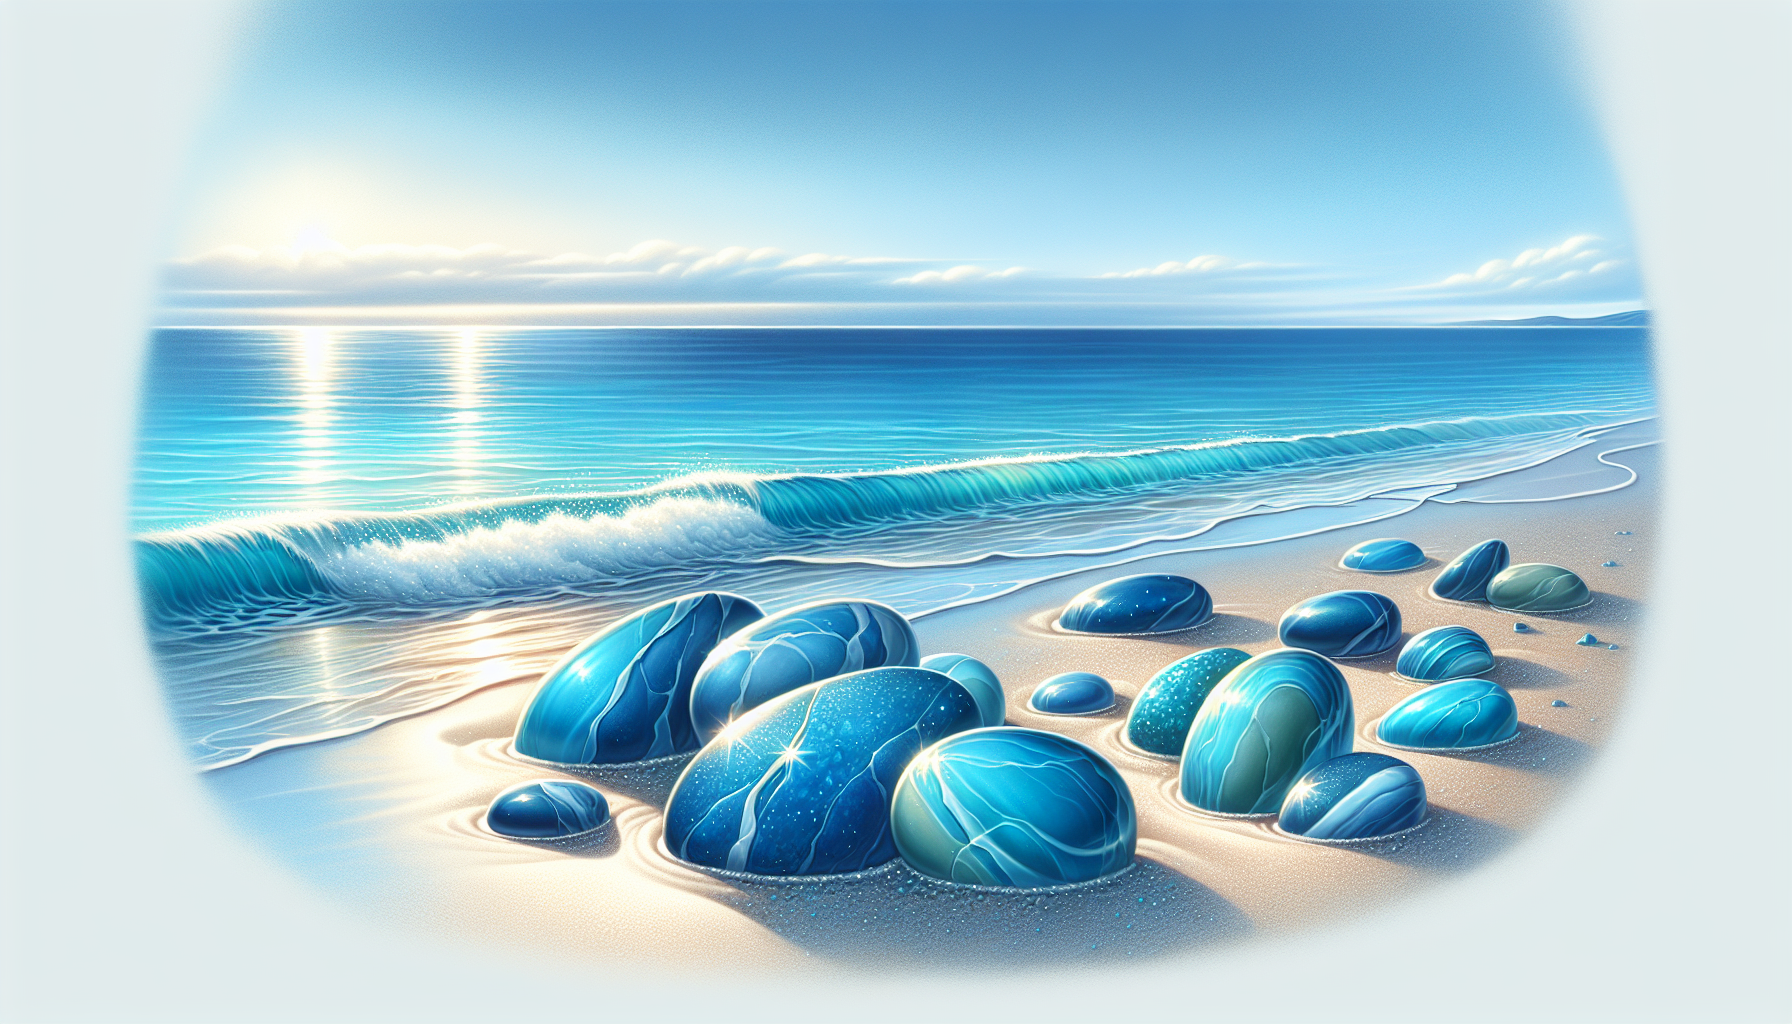 Illustration of a serene ocean with beautiful blue stones representing Larimar